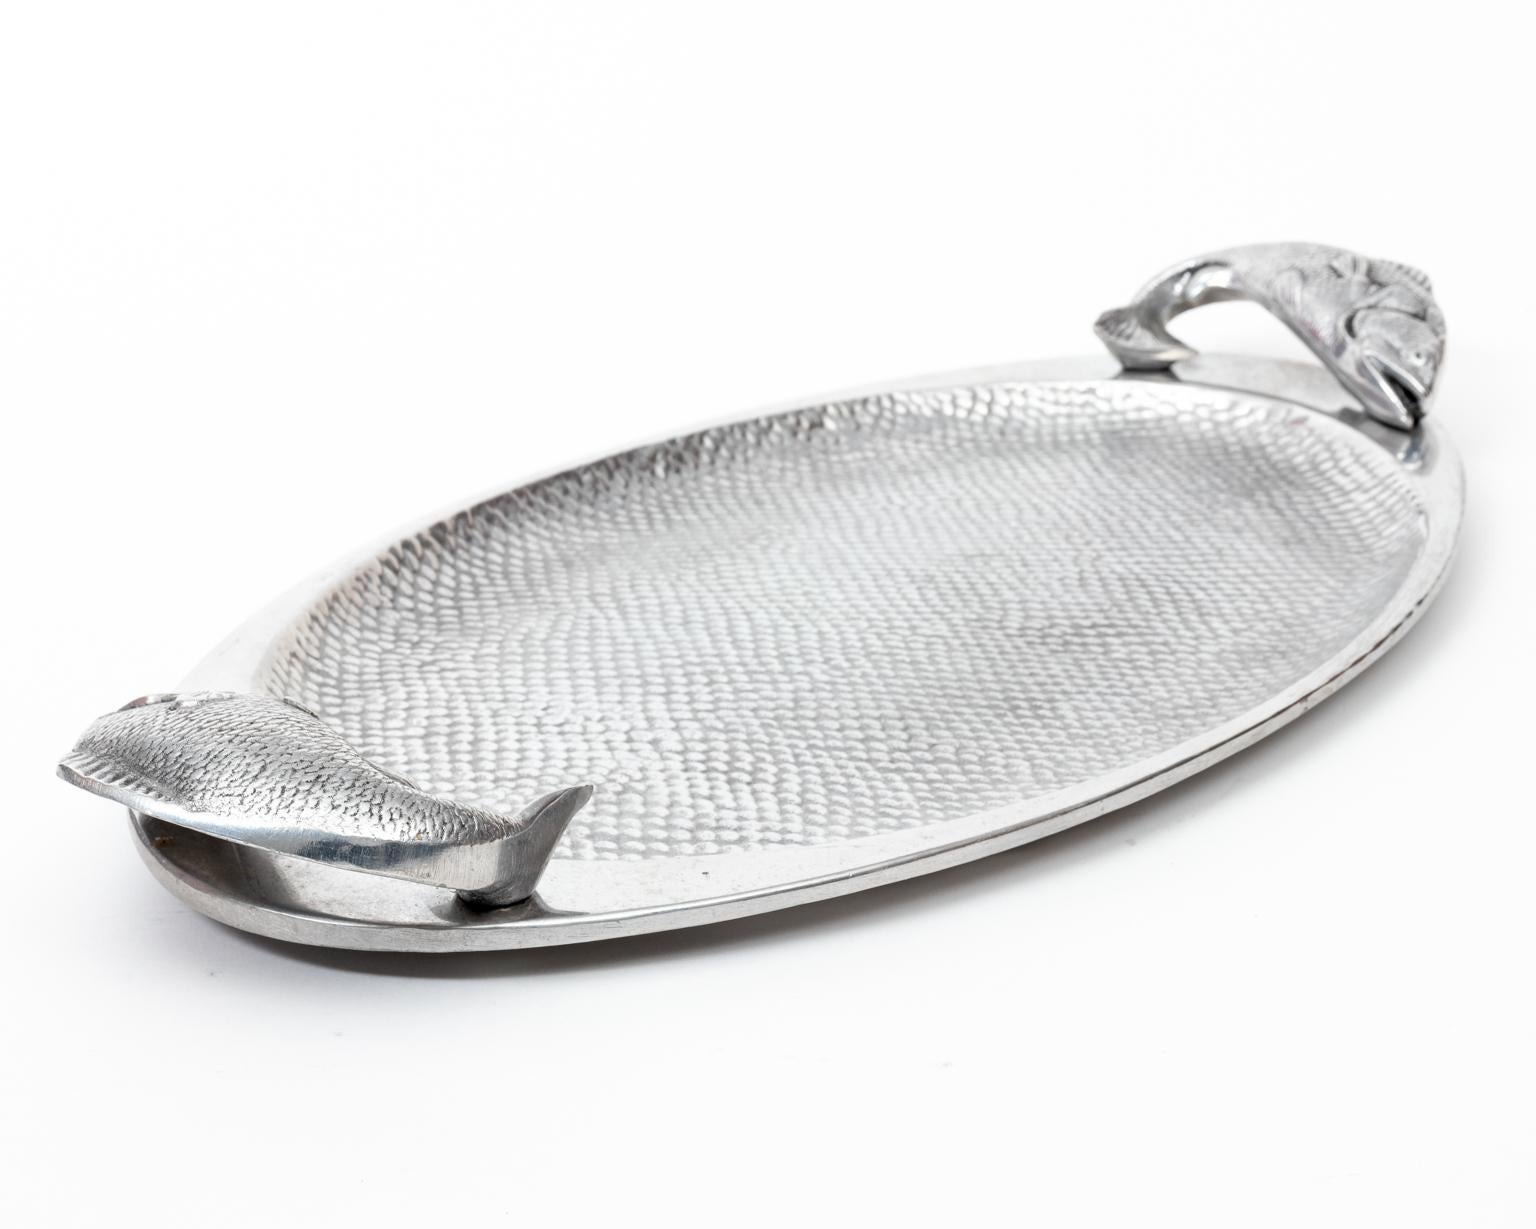 Bruce Fox Design Wiltonware Fish Serving Platter 1